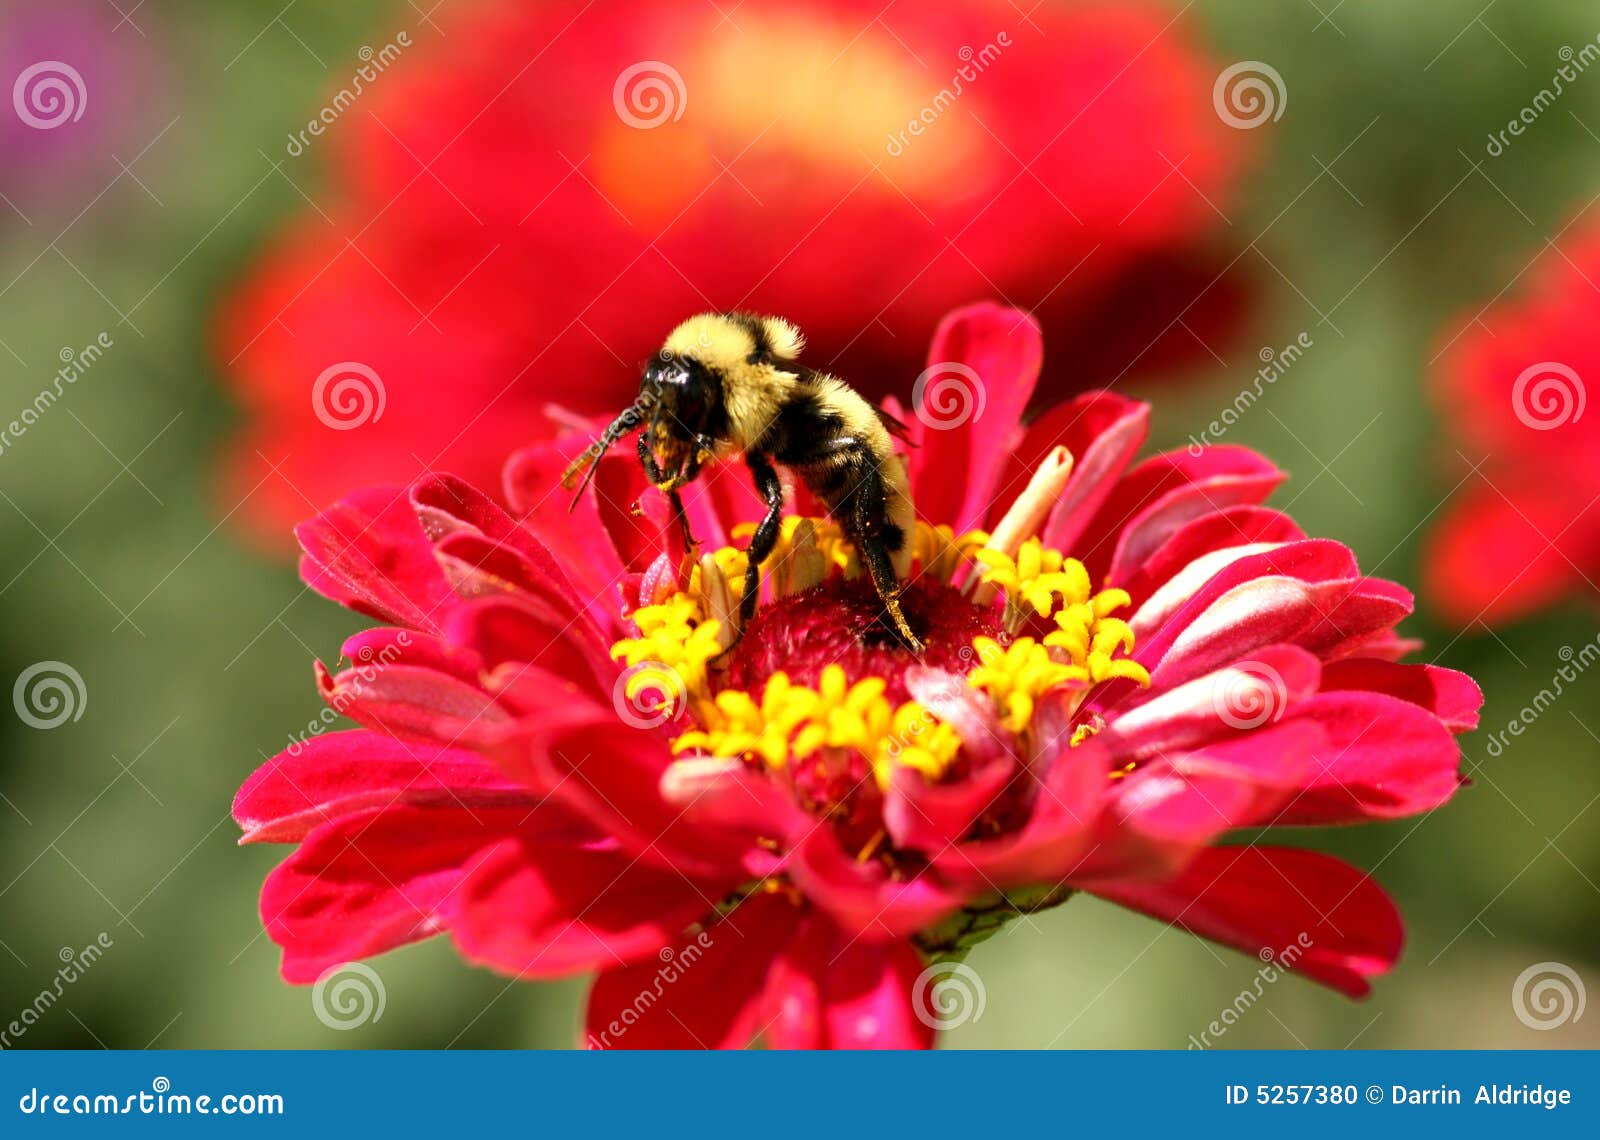 bumble bee gathering nectar